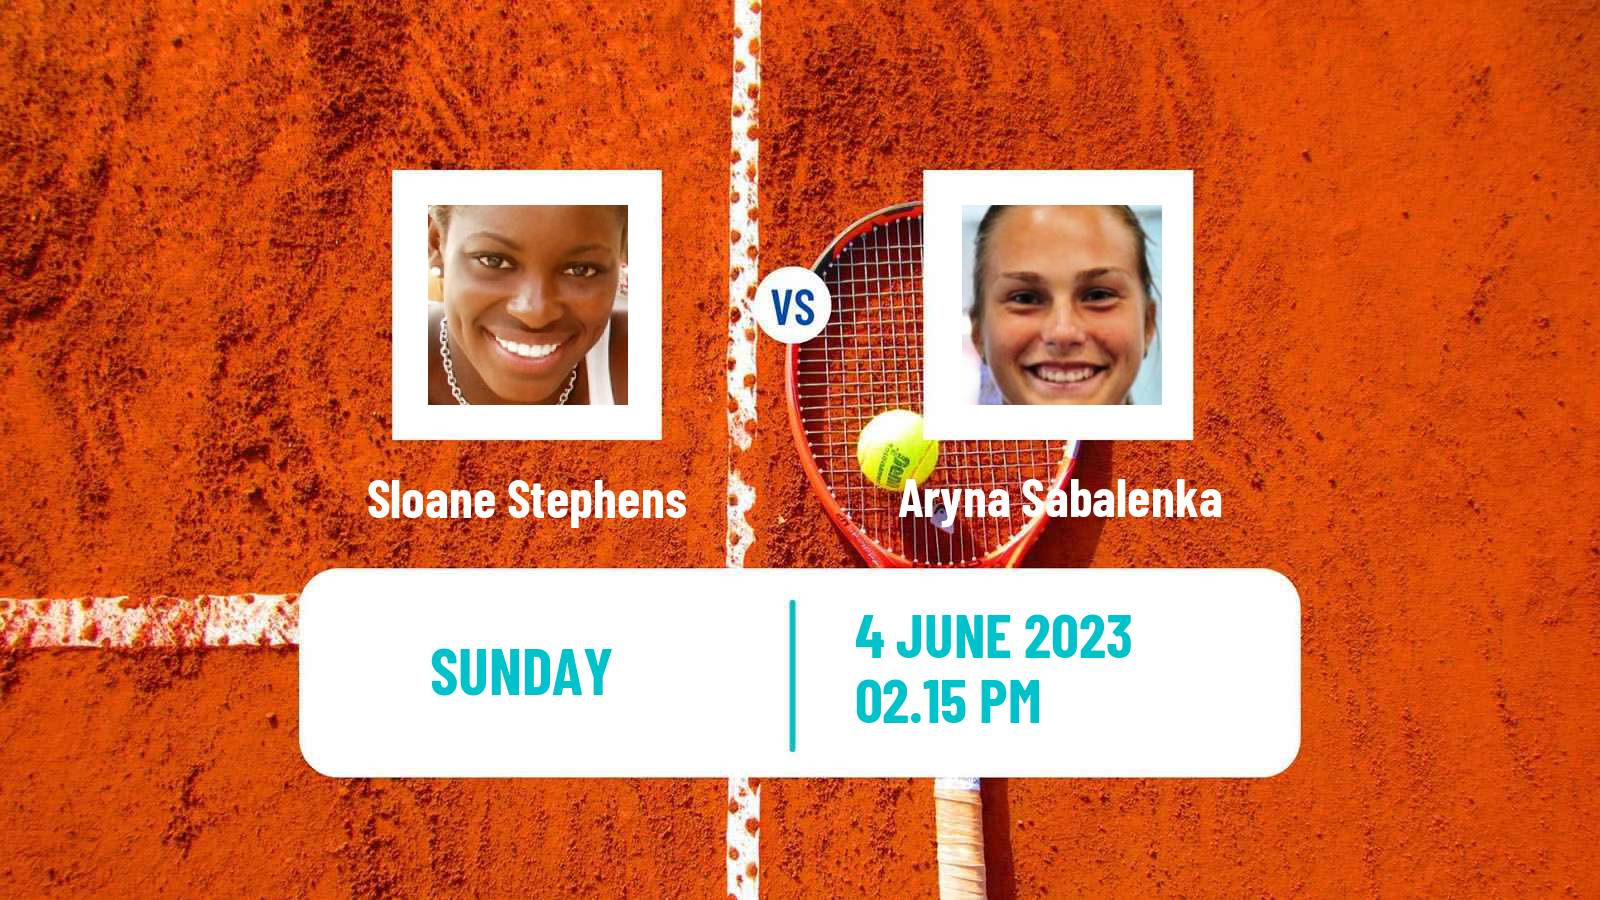 Tennis WTA Roland Garros Sloane Stephens - Aryna Sabalenka